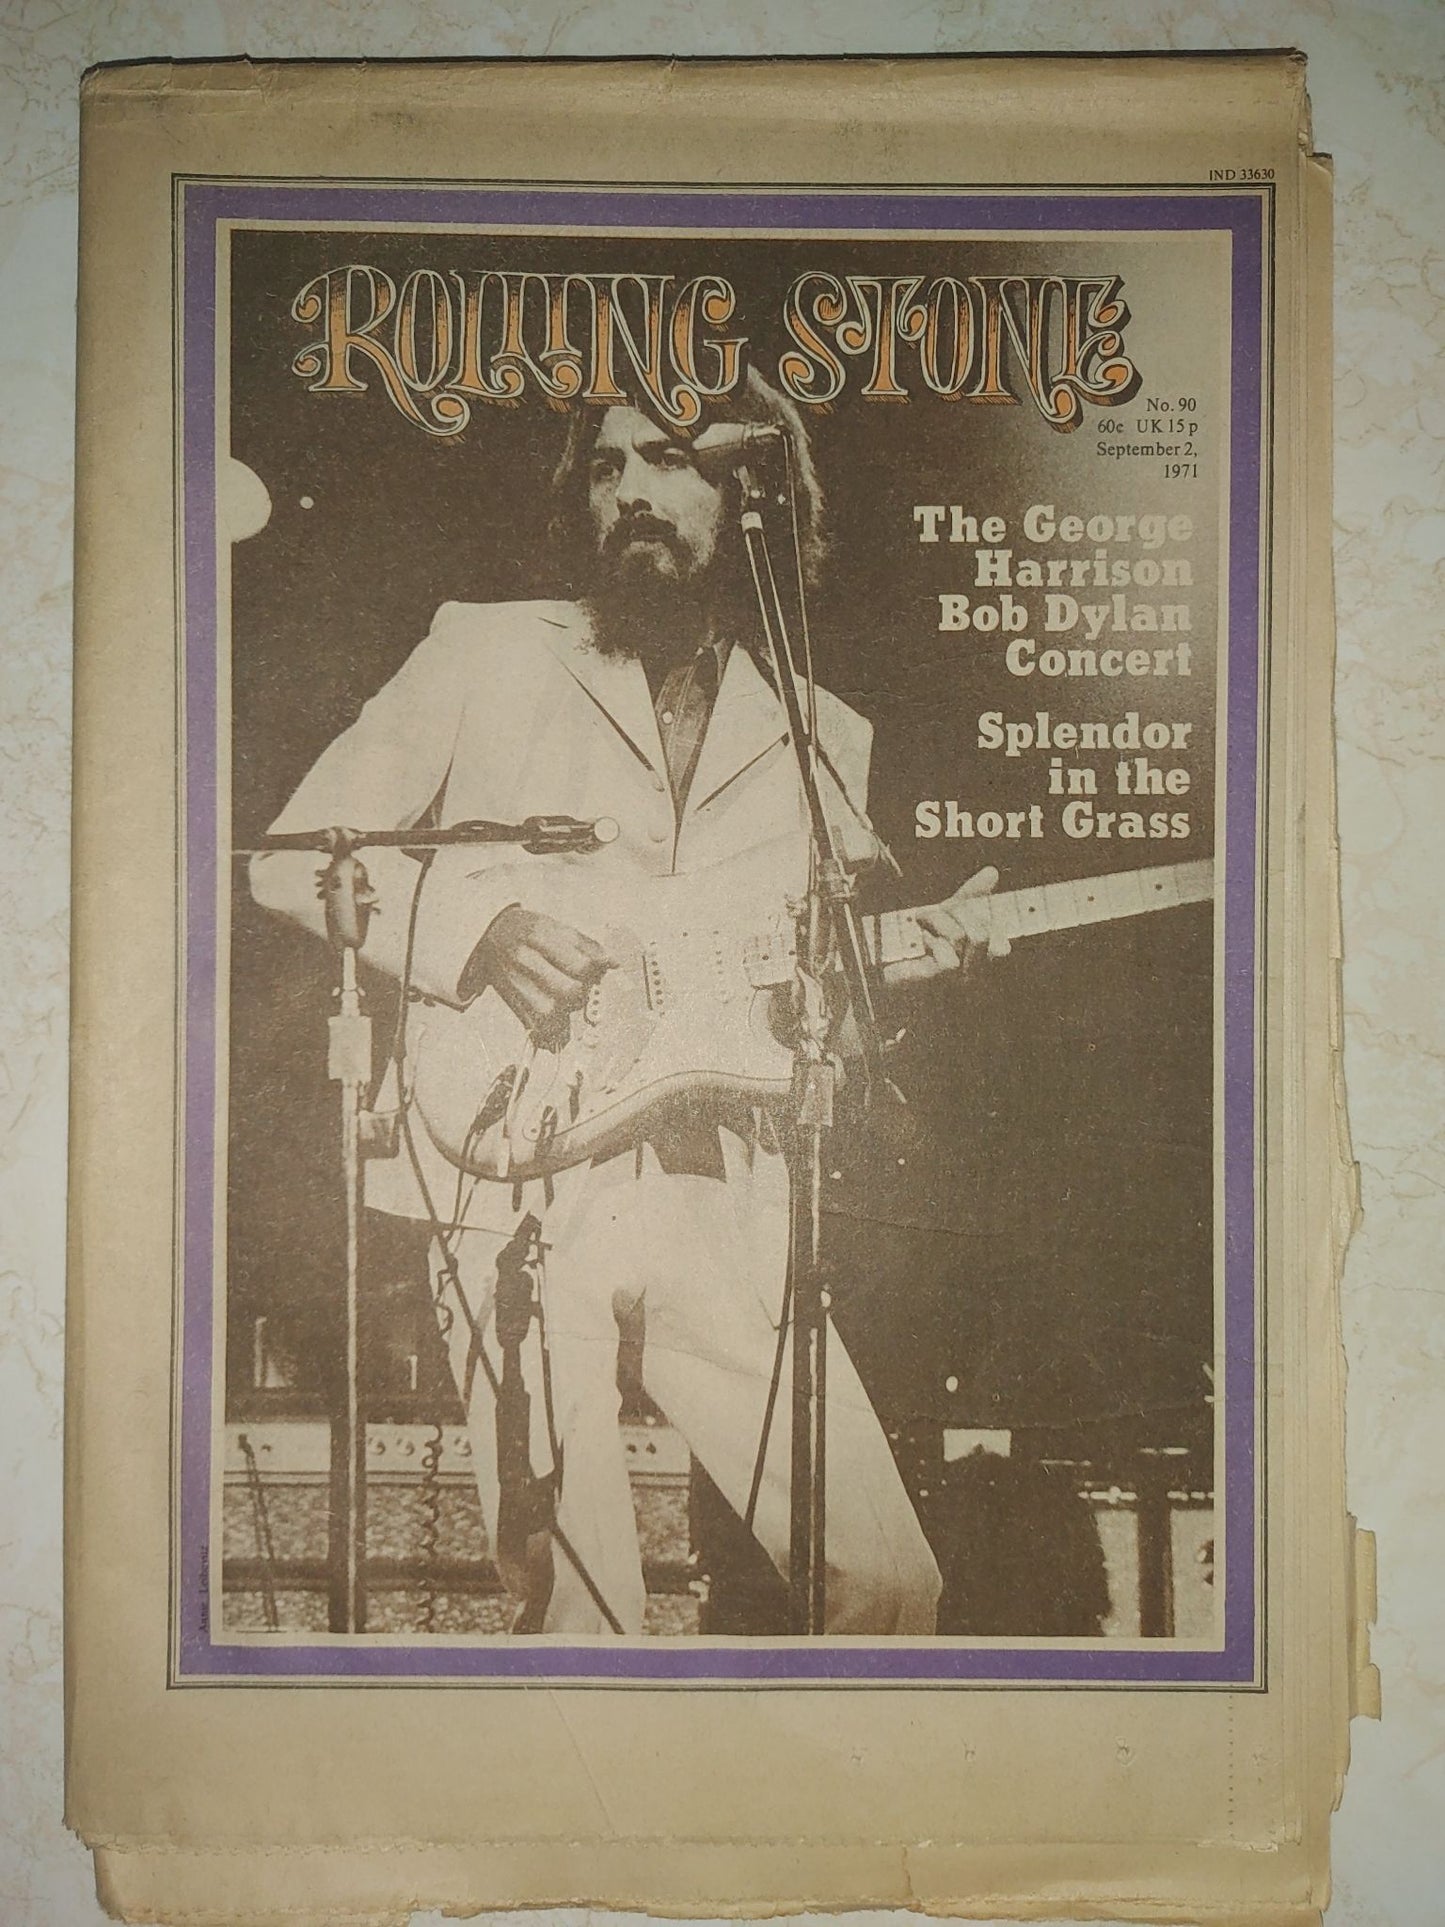 Rolling Stone Magazine Sept. 2, 1971 Issue # 90 George Harrison